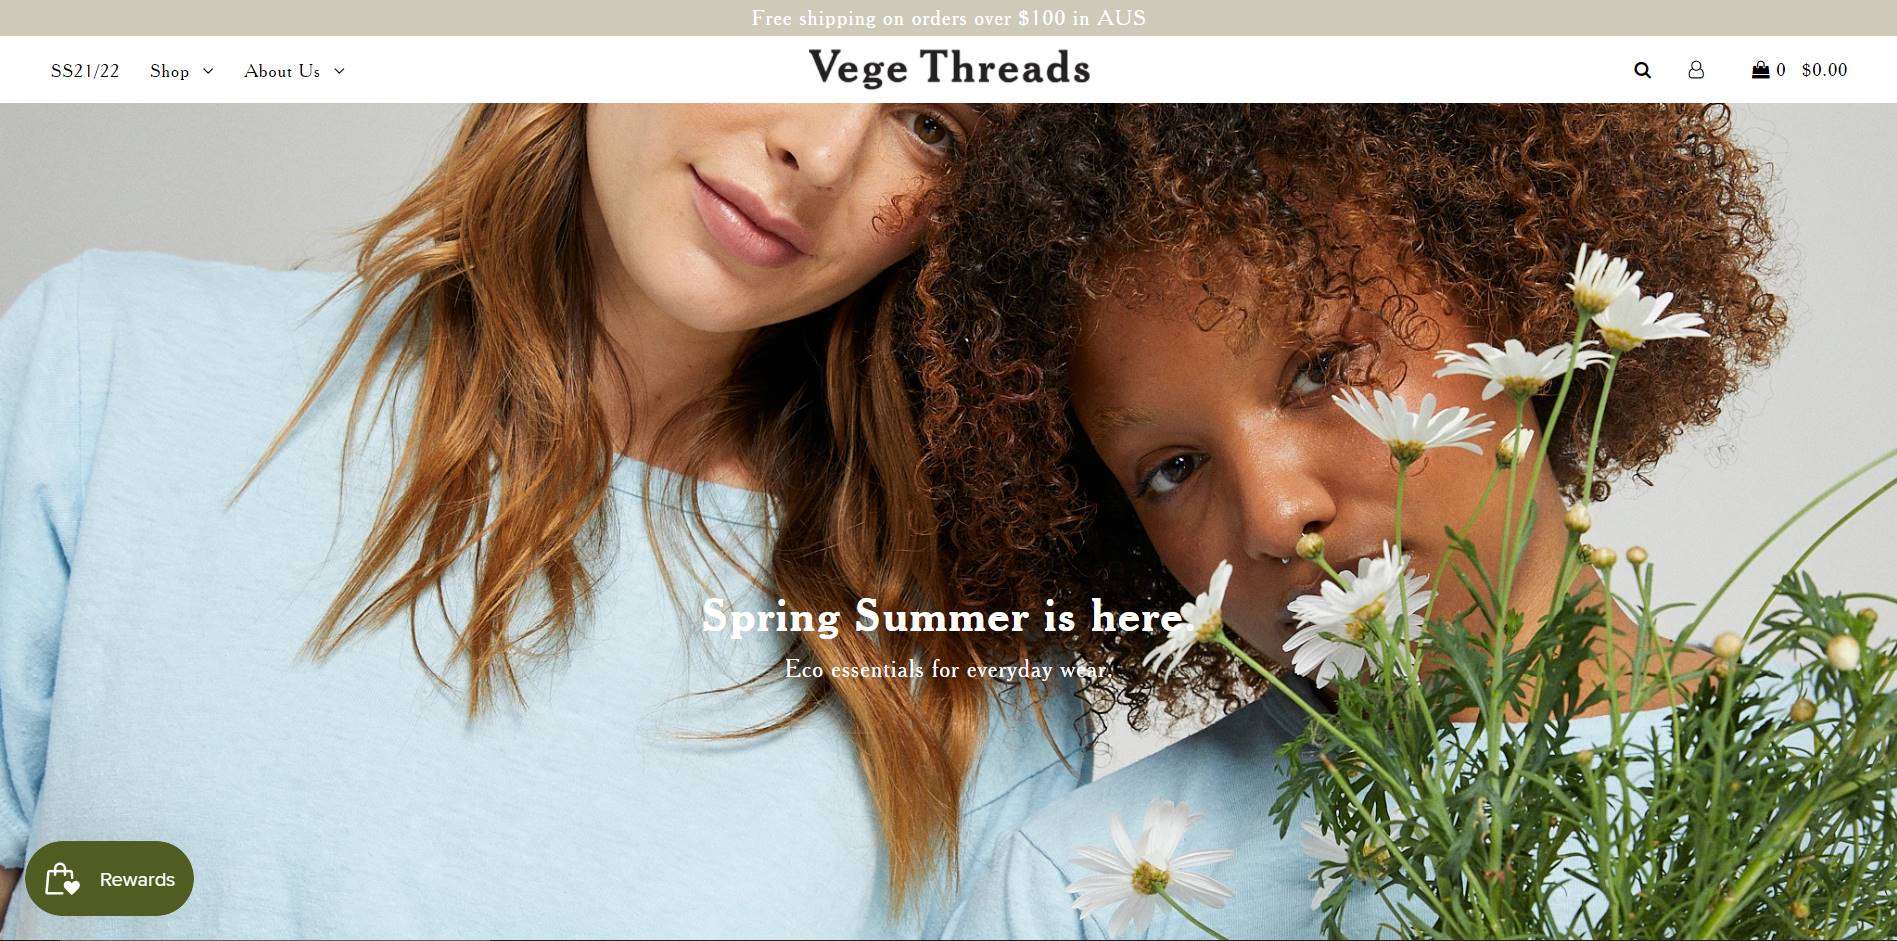 Vege Threads